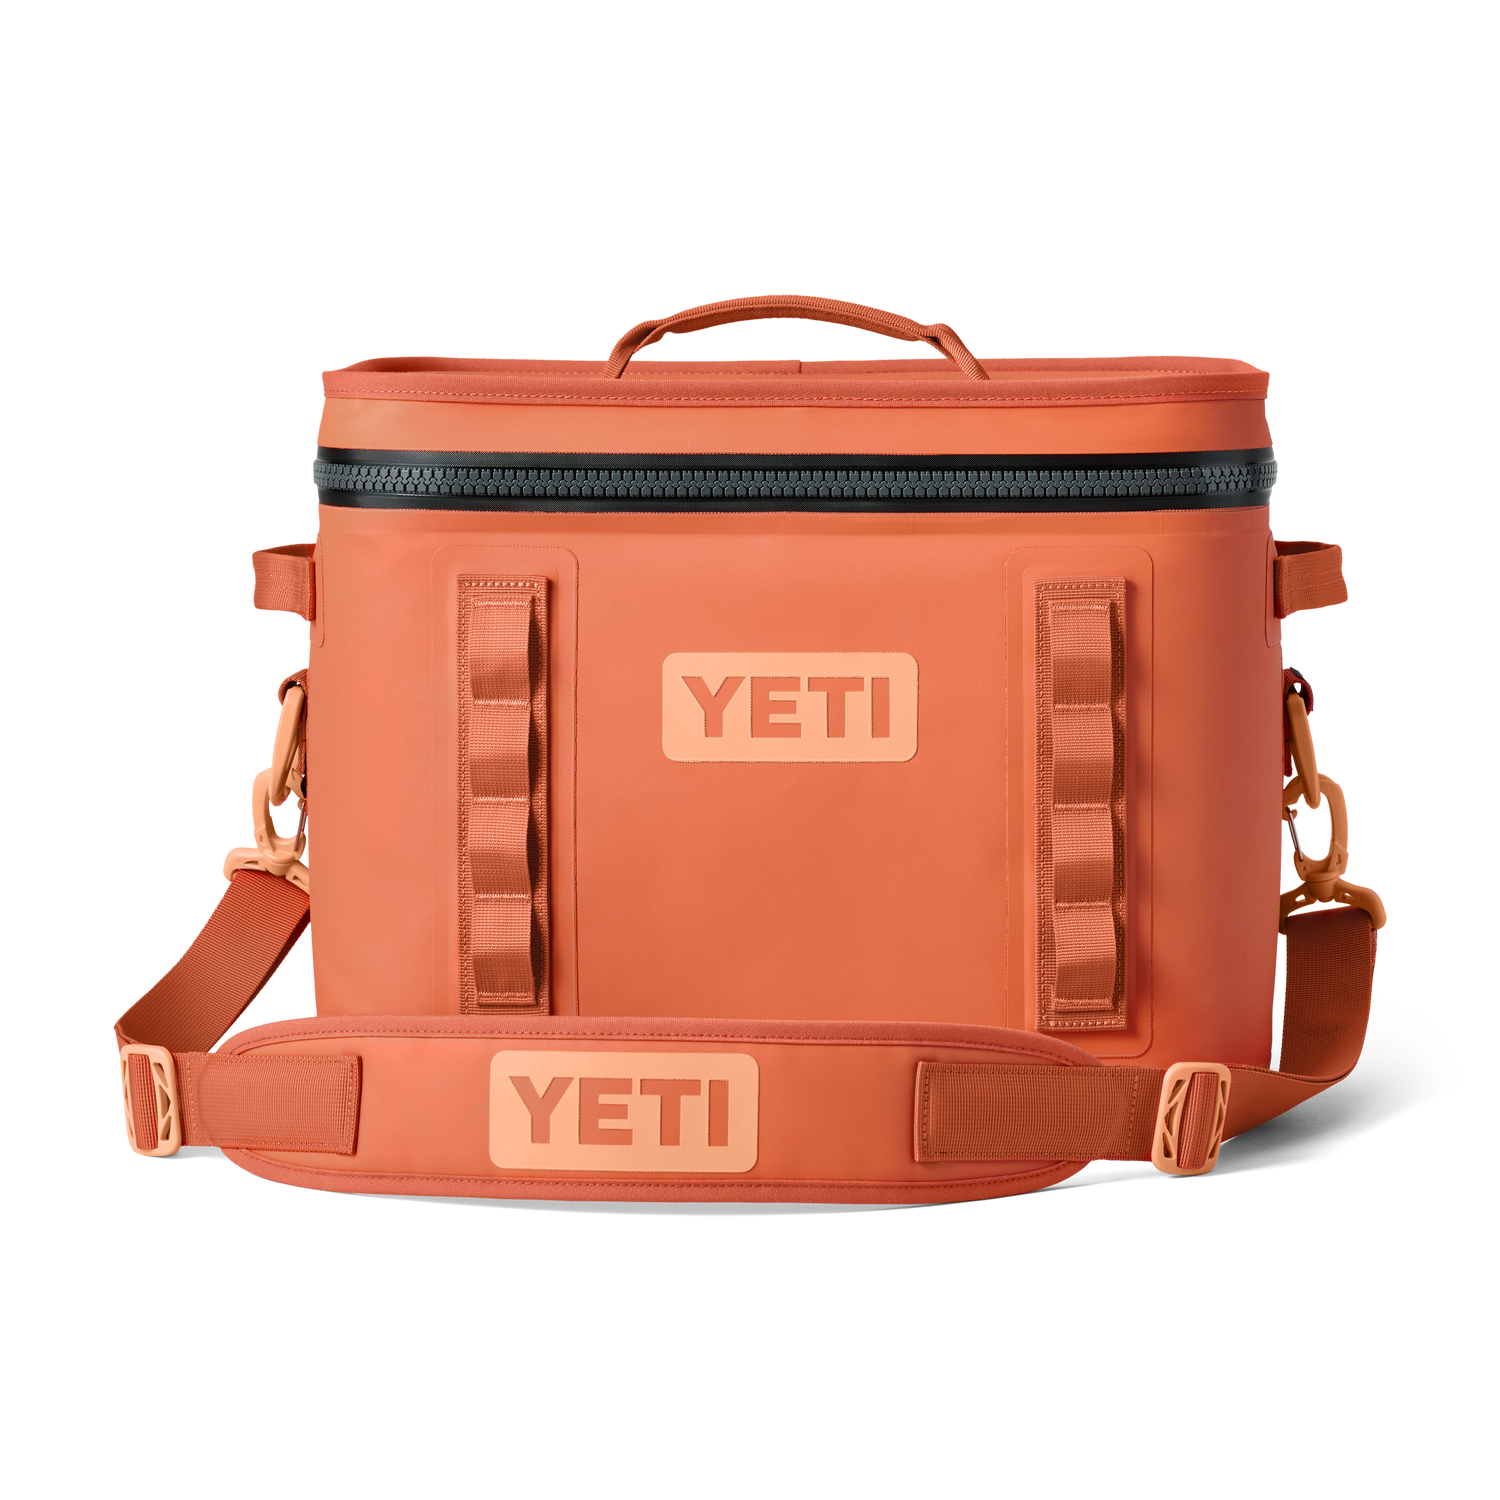 YETI Hopper M30 Portable Soft Cooler, King Crab–